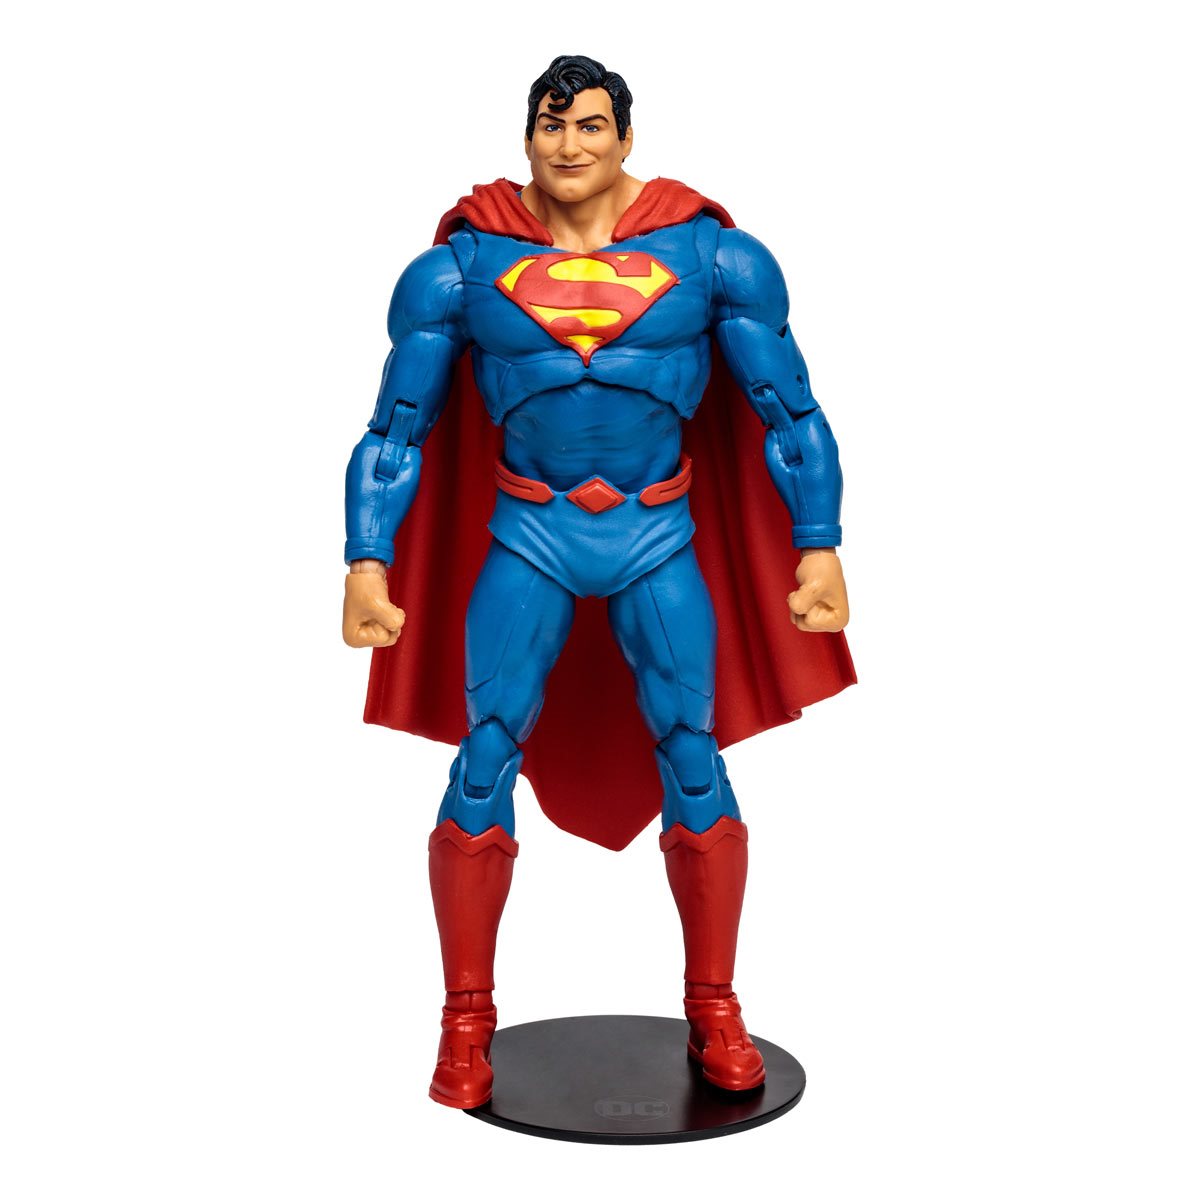 DC Superman Action Figure - Heretoserveyou